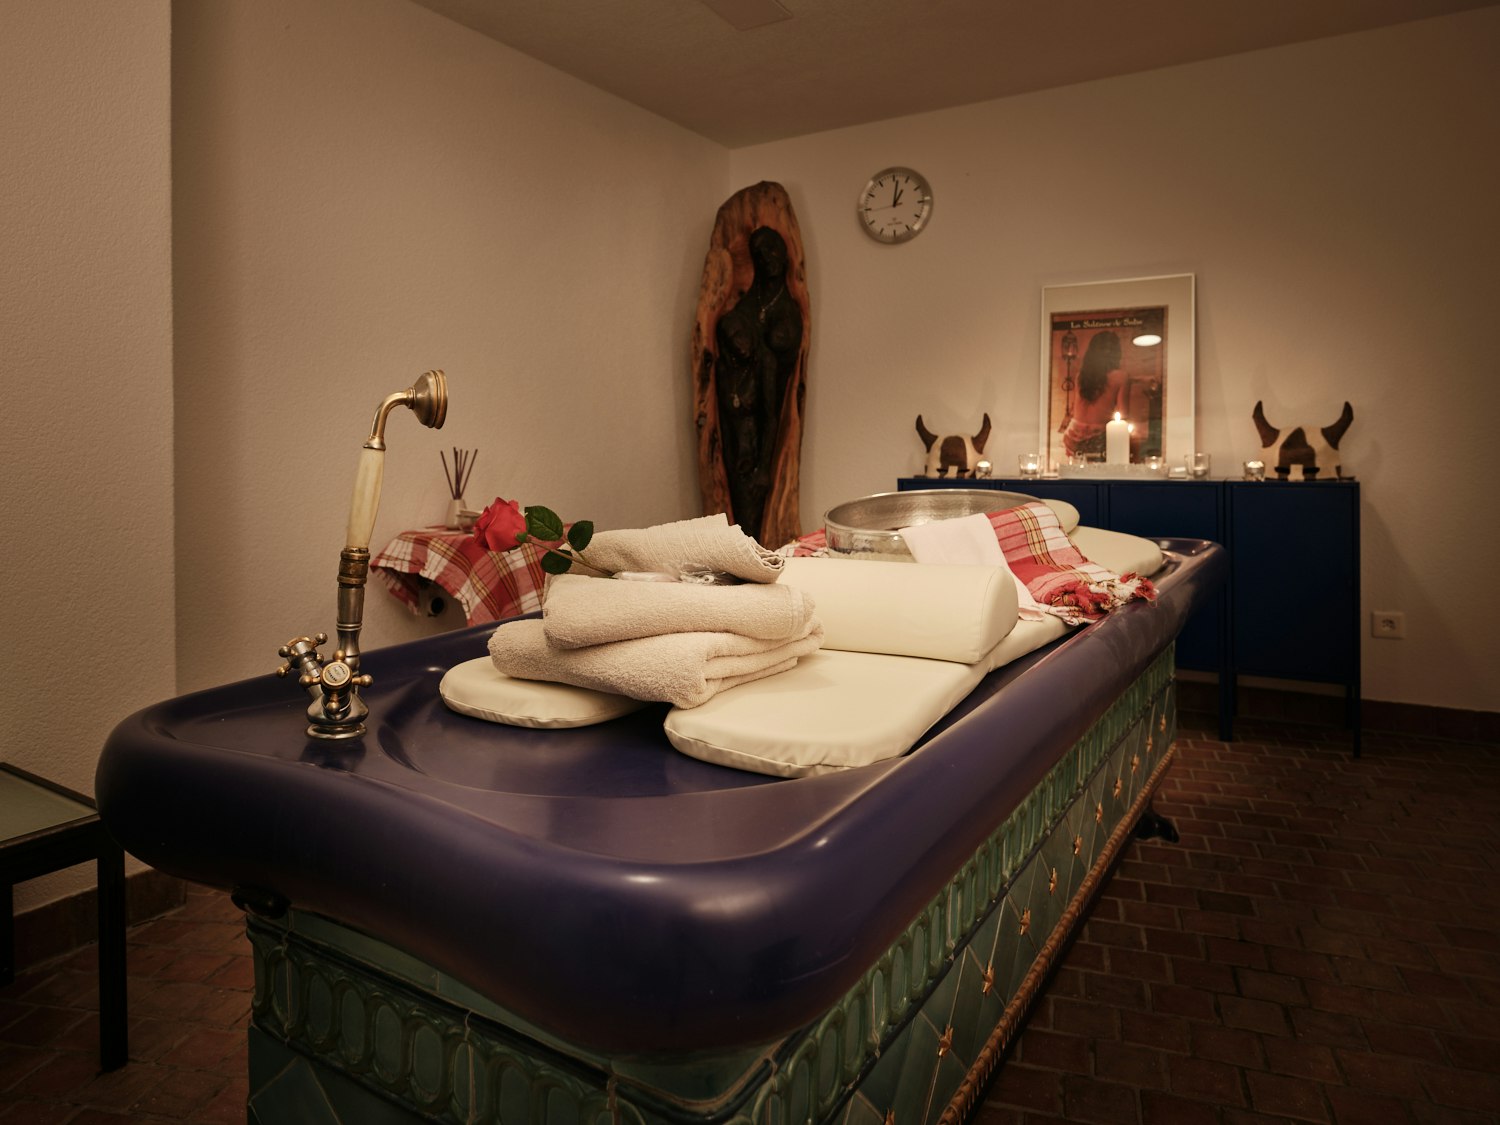 Grand Spa - Full body massage